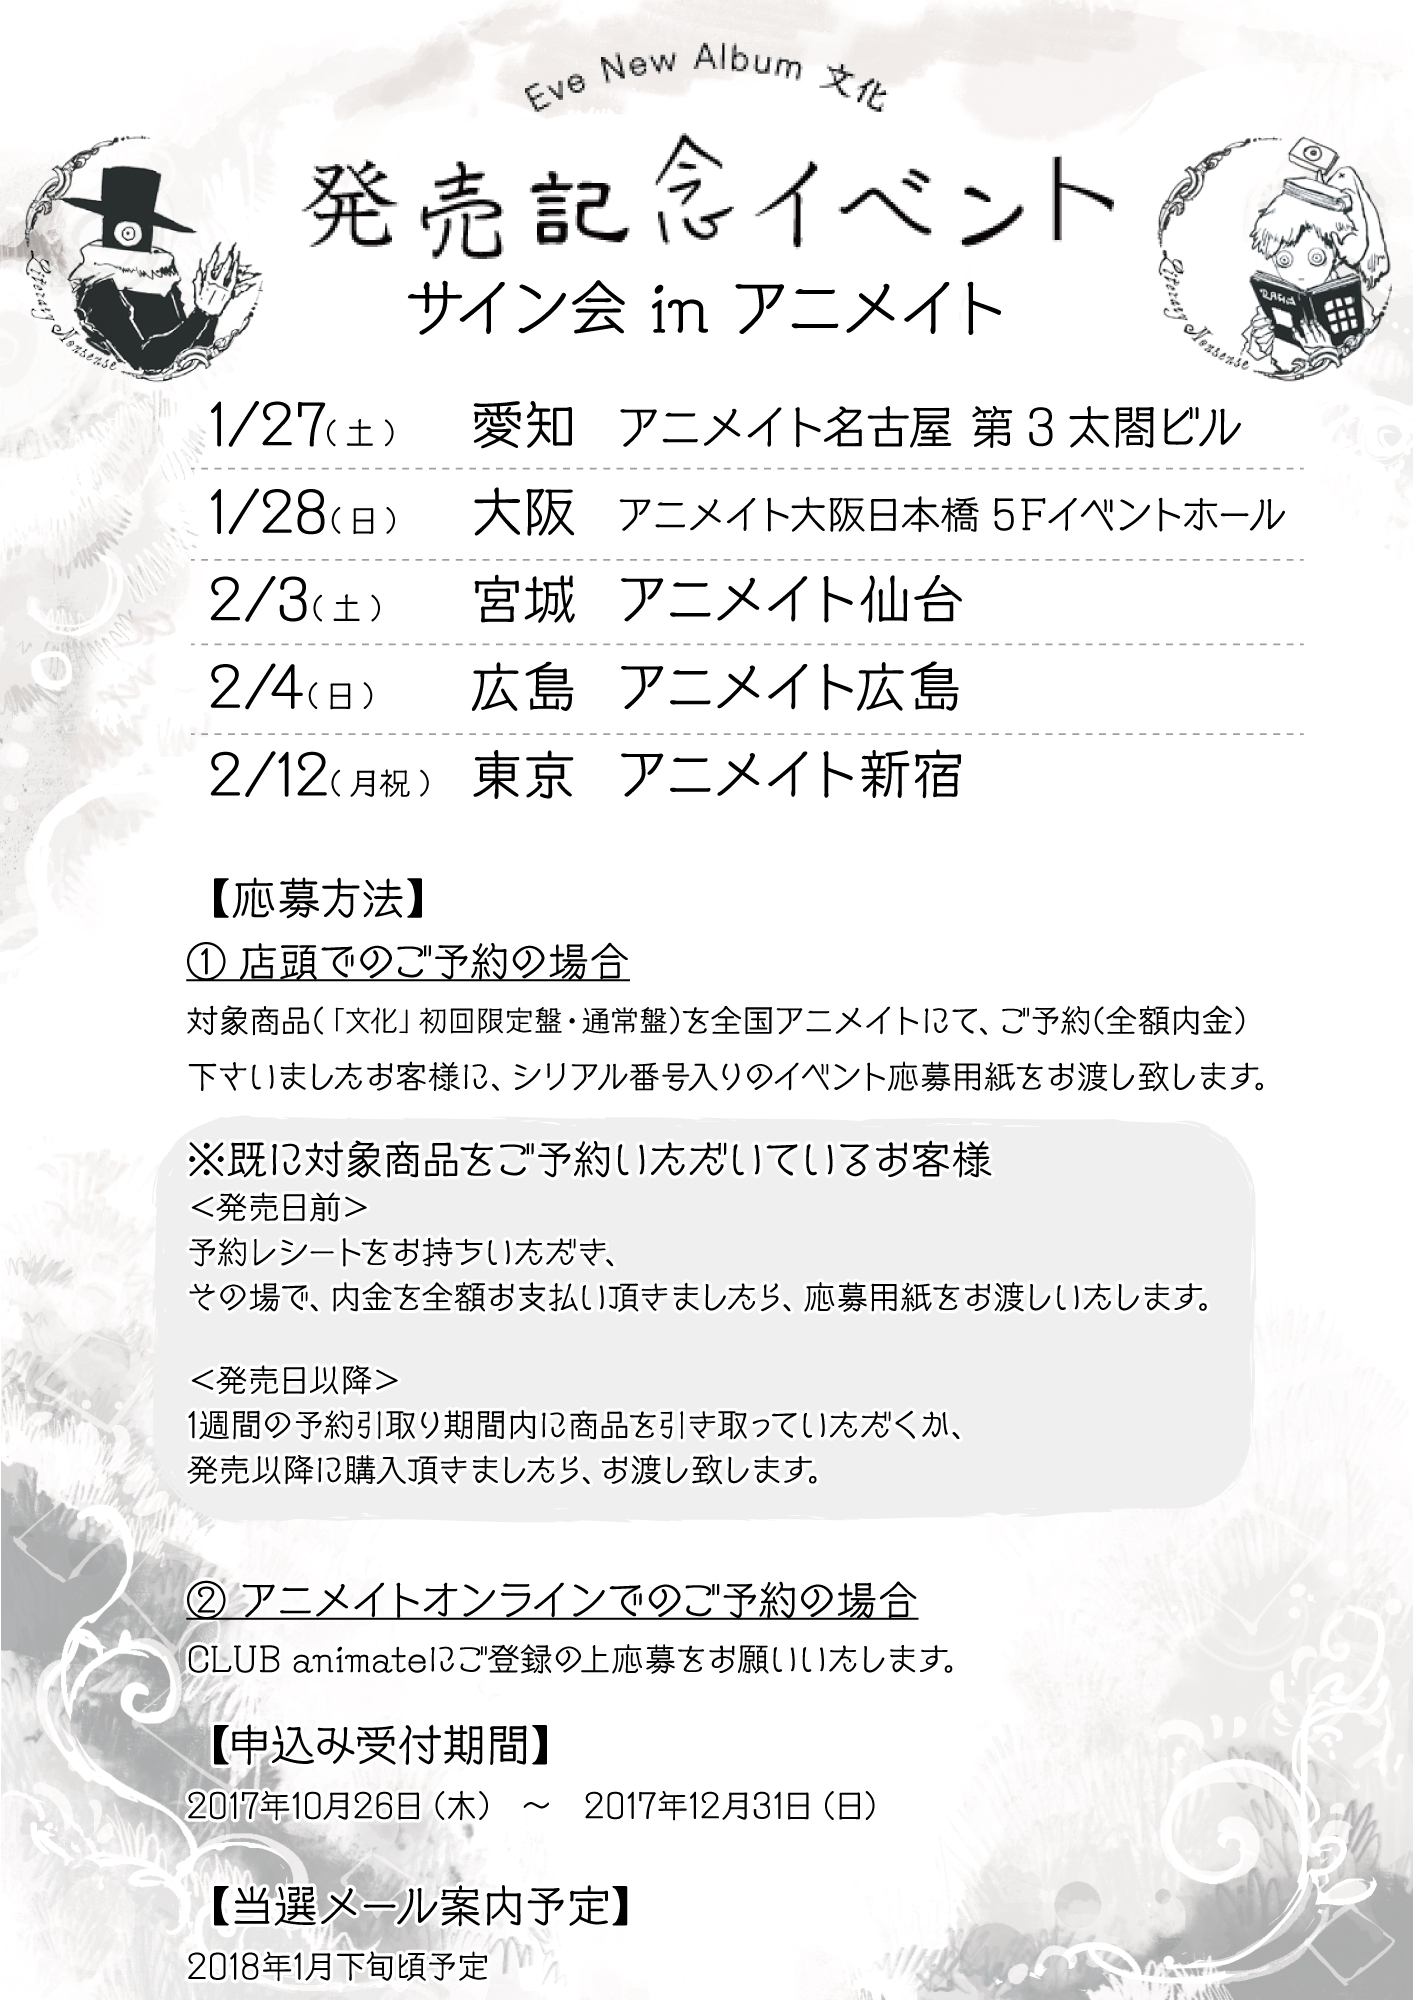 New Album 文化 発売記念サイン会 Event Eve Official Site